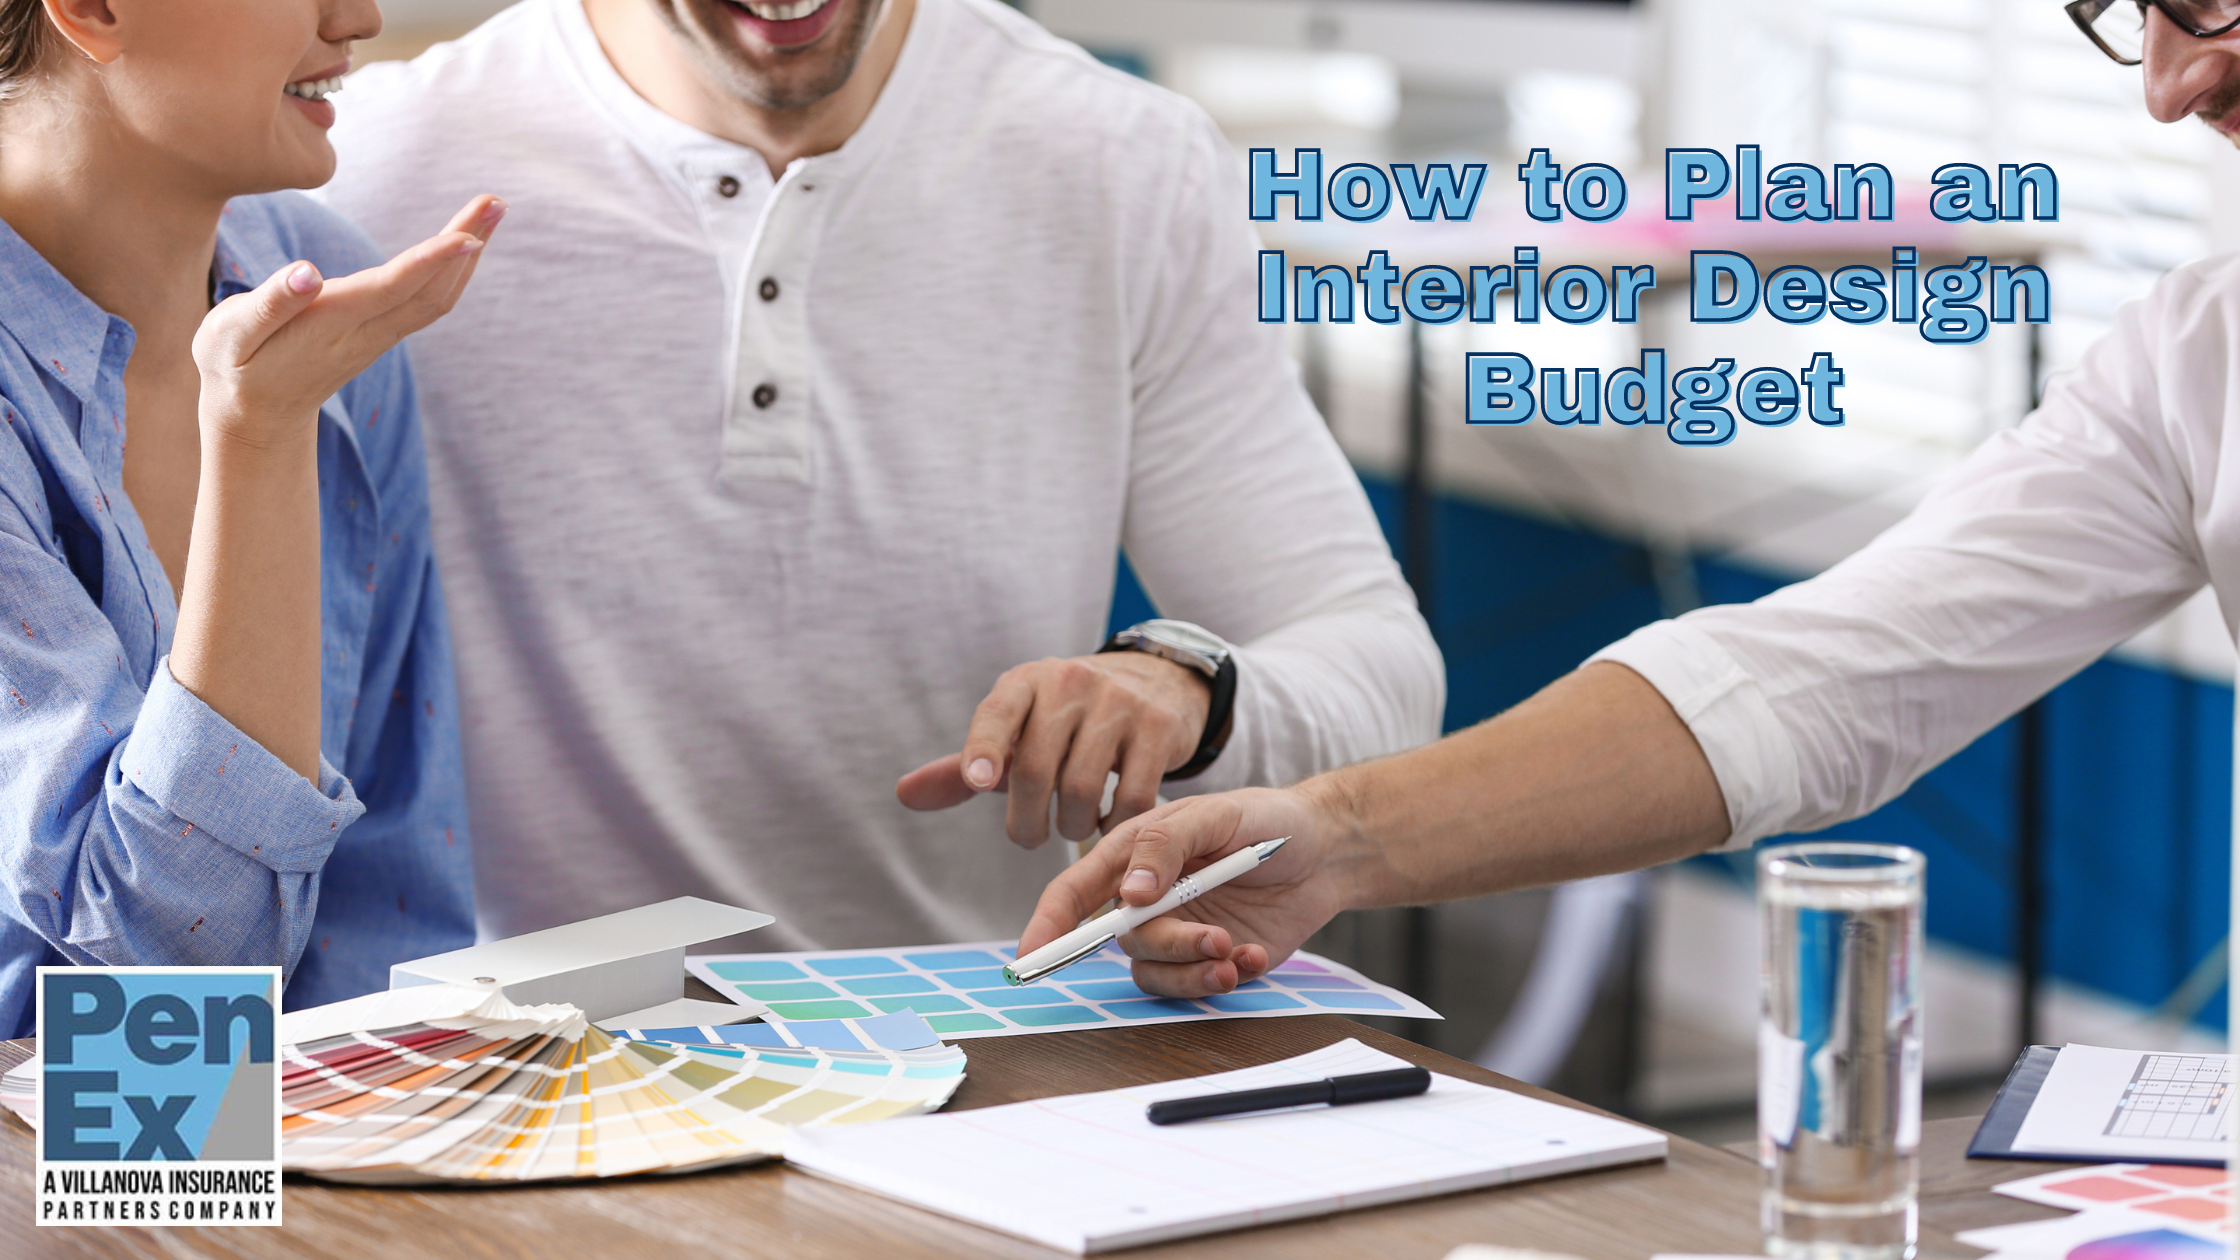 Interior design budget